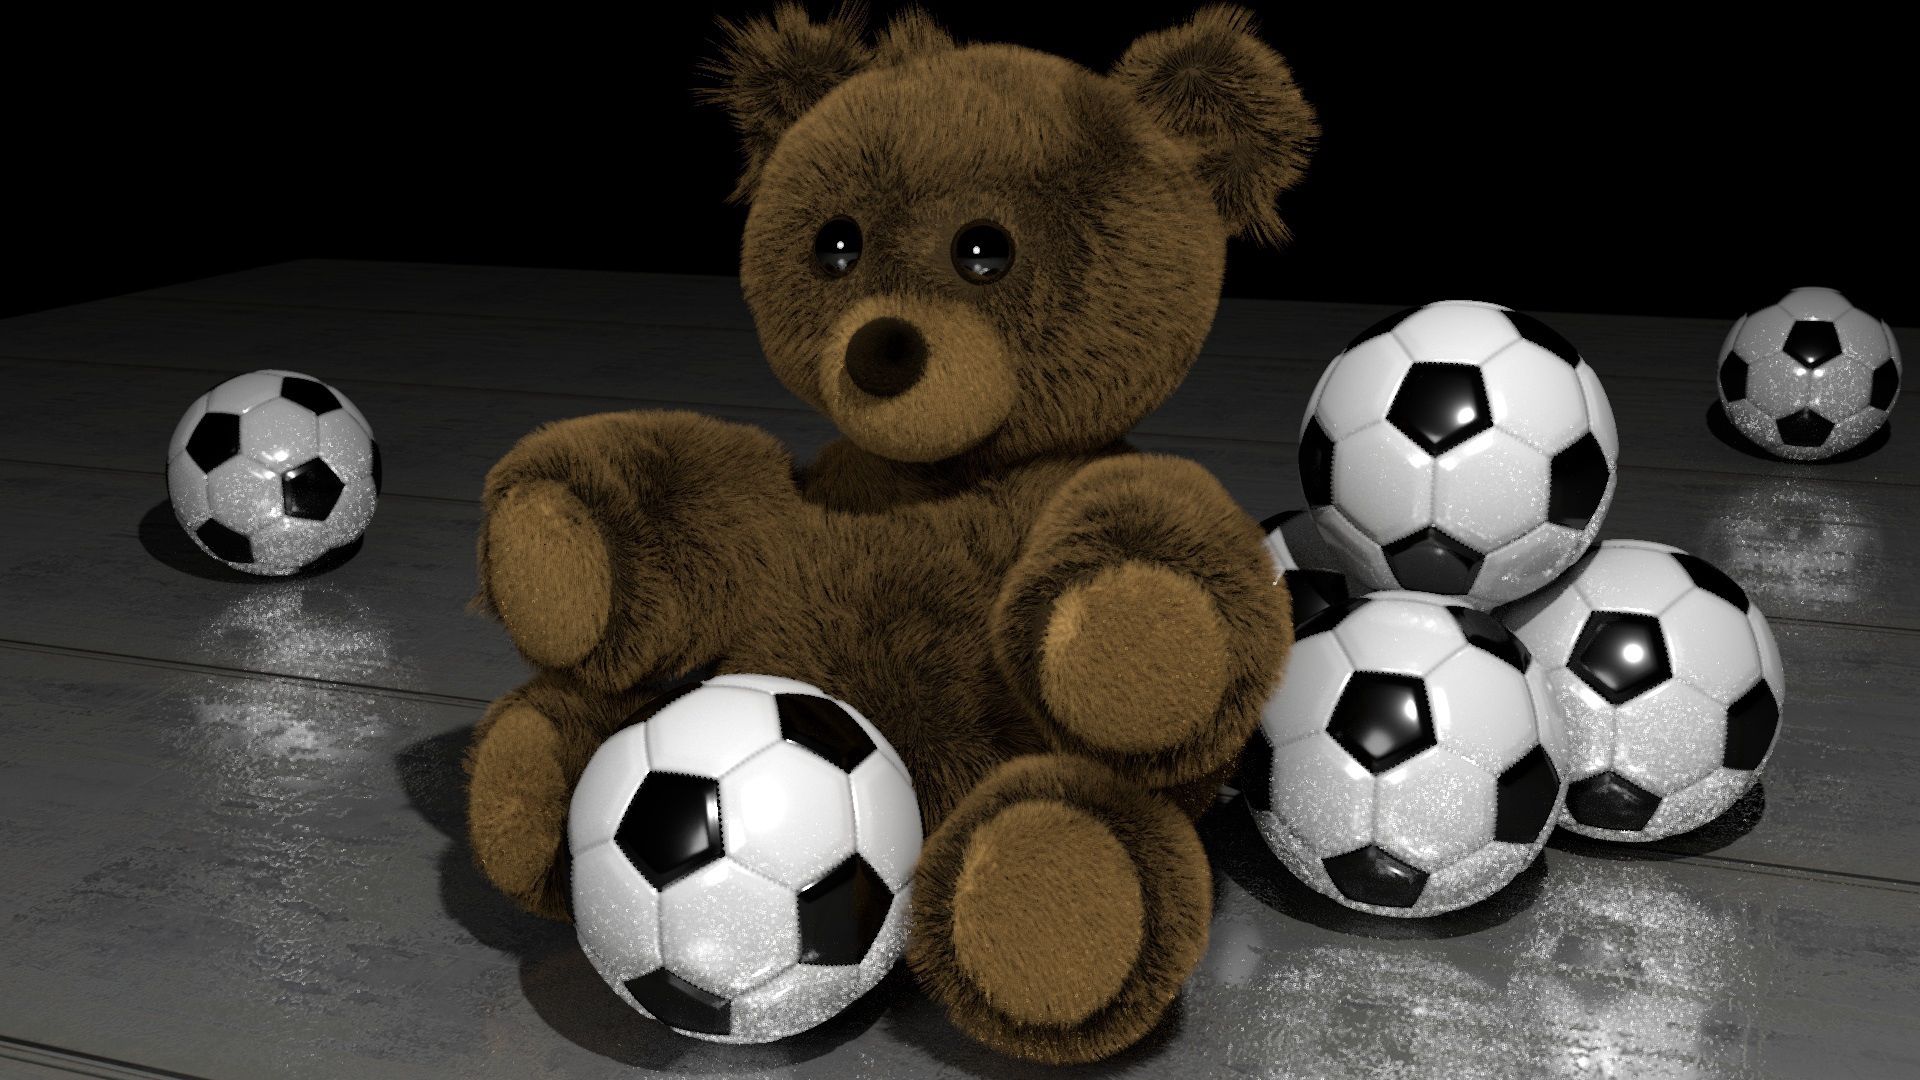 miscellanea, toys, teddy bear, miscellaneous, football balls, footballs